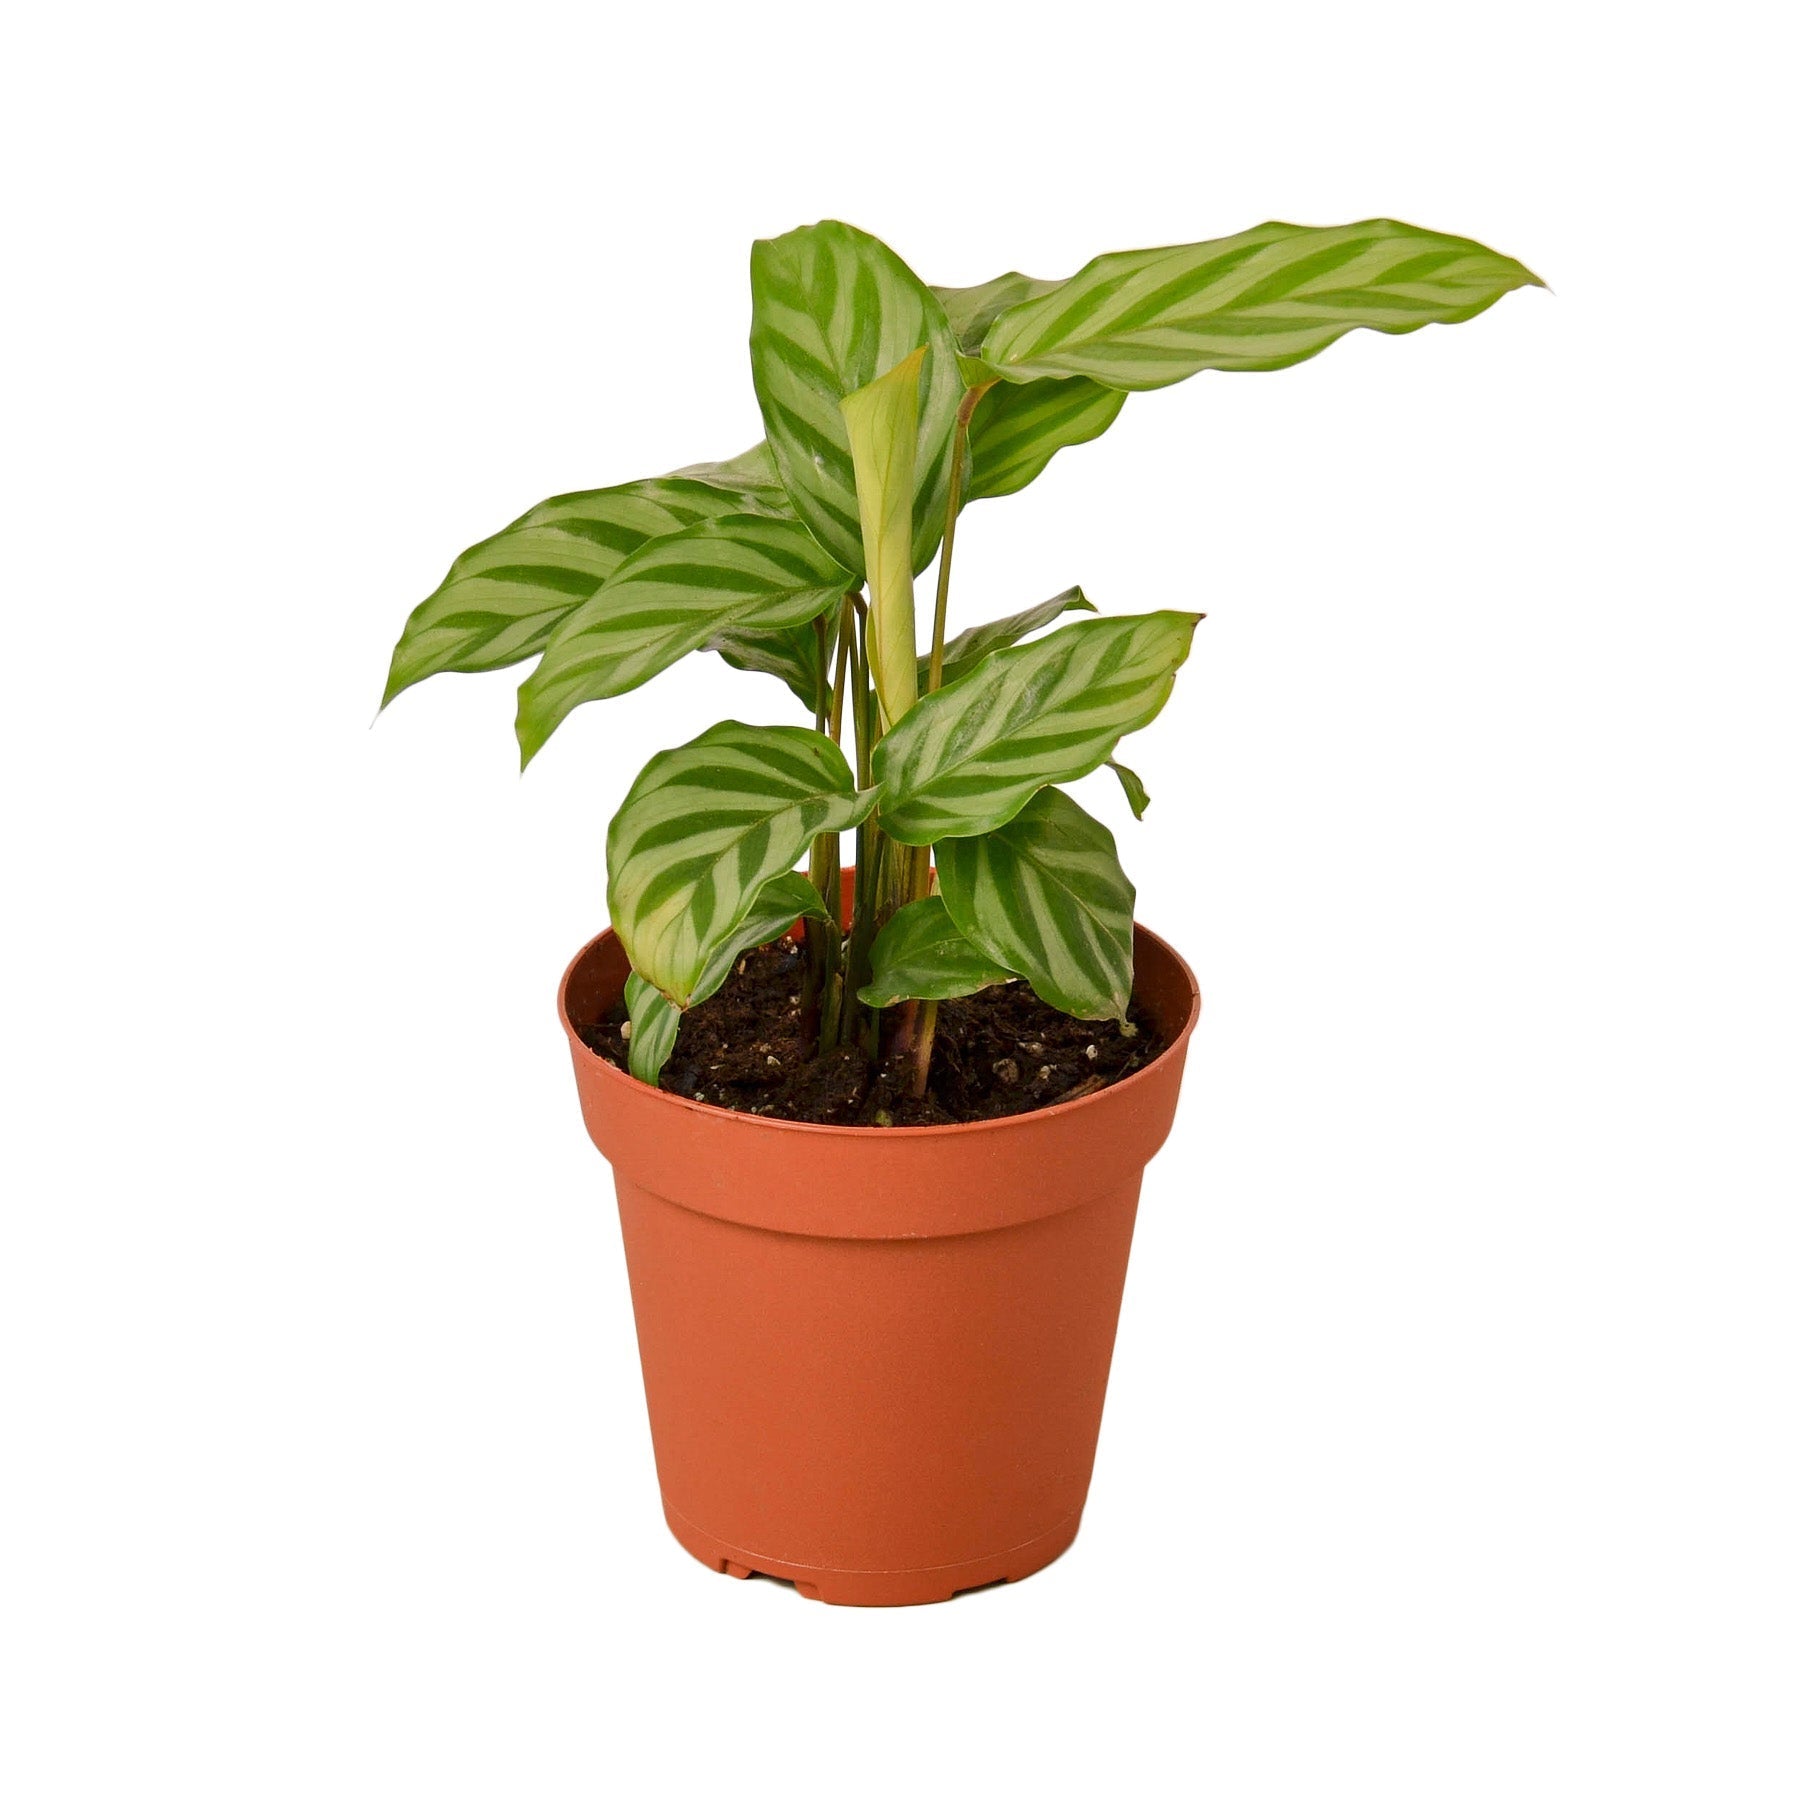 Calathea Concinna 'Freddie' - 4" Pot - NURSERY POT ONLY - One Beleaf Away Plant Studio